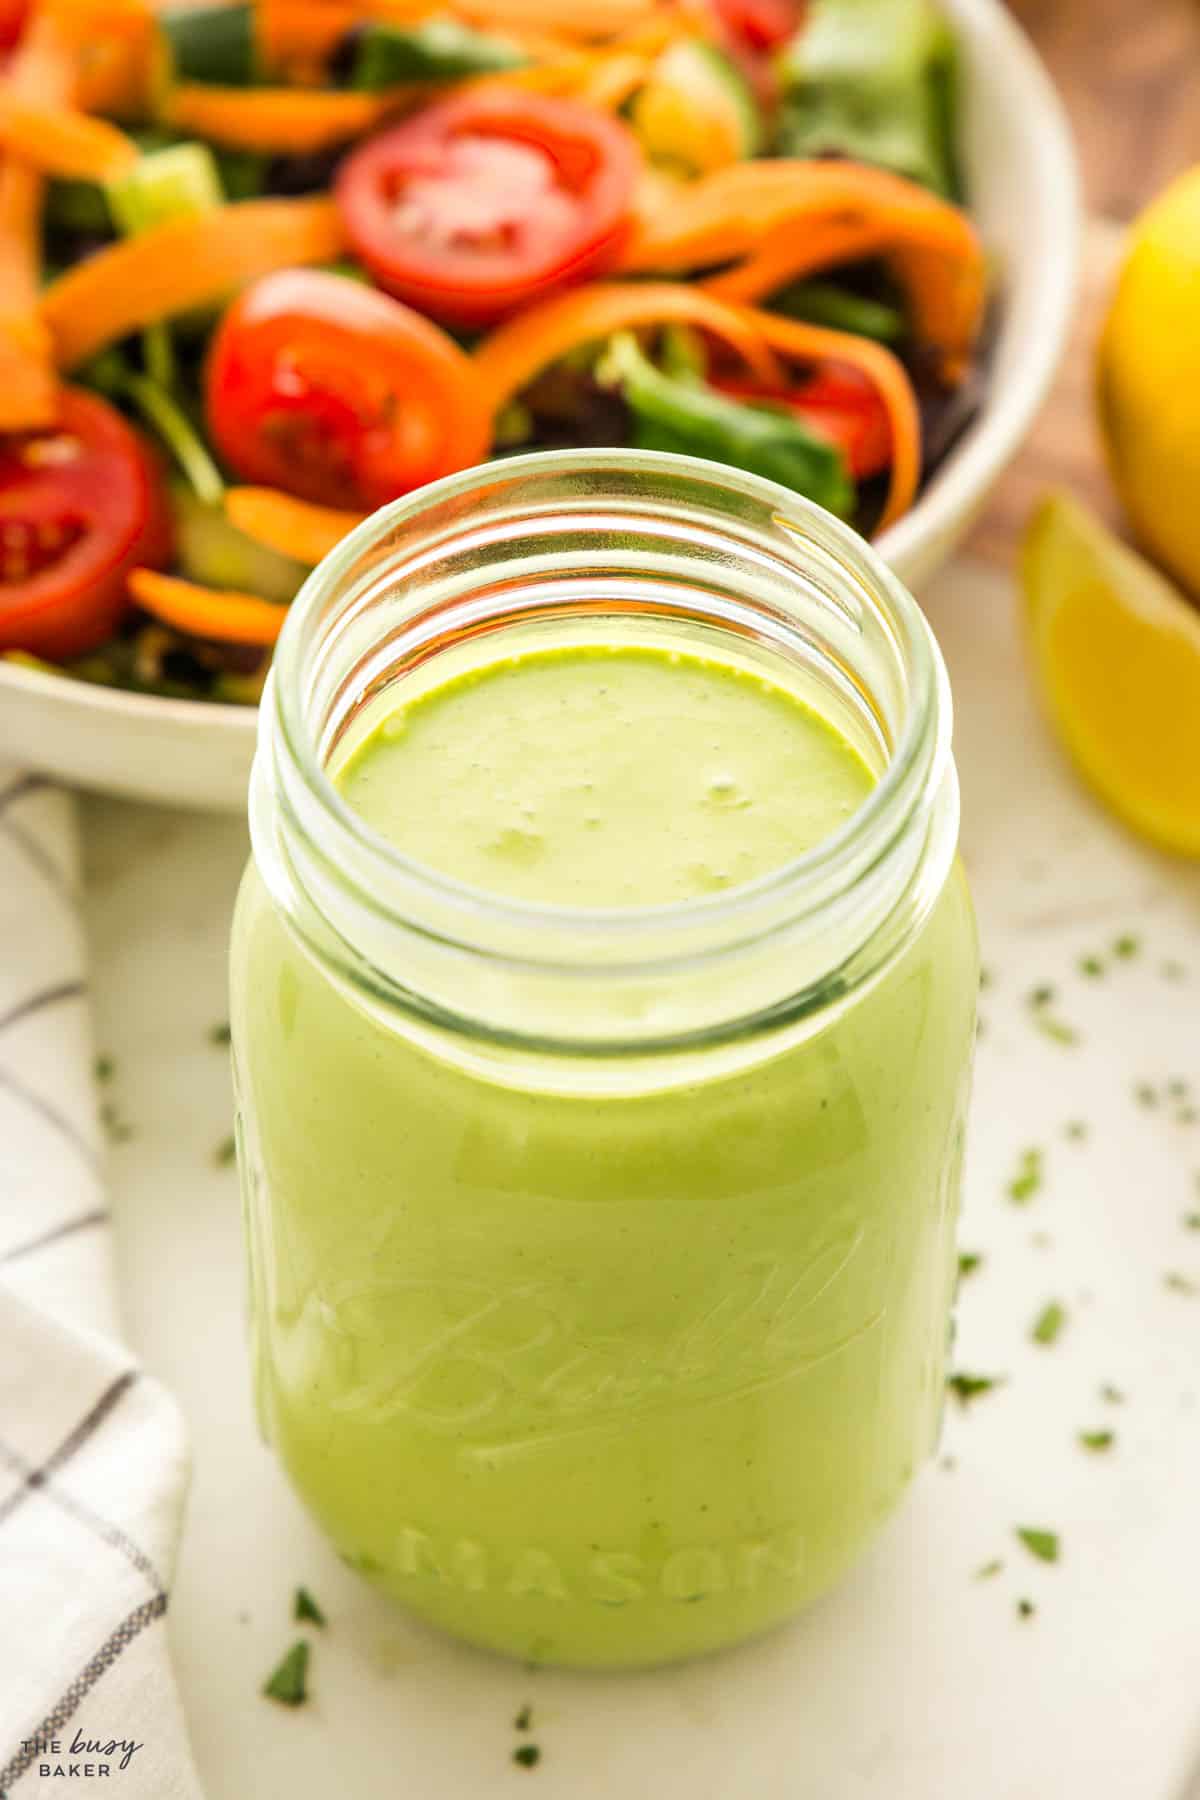 green goddess salad dressing in a jar